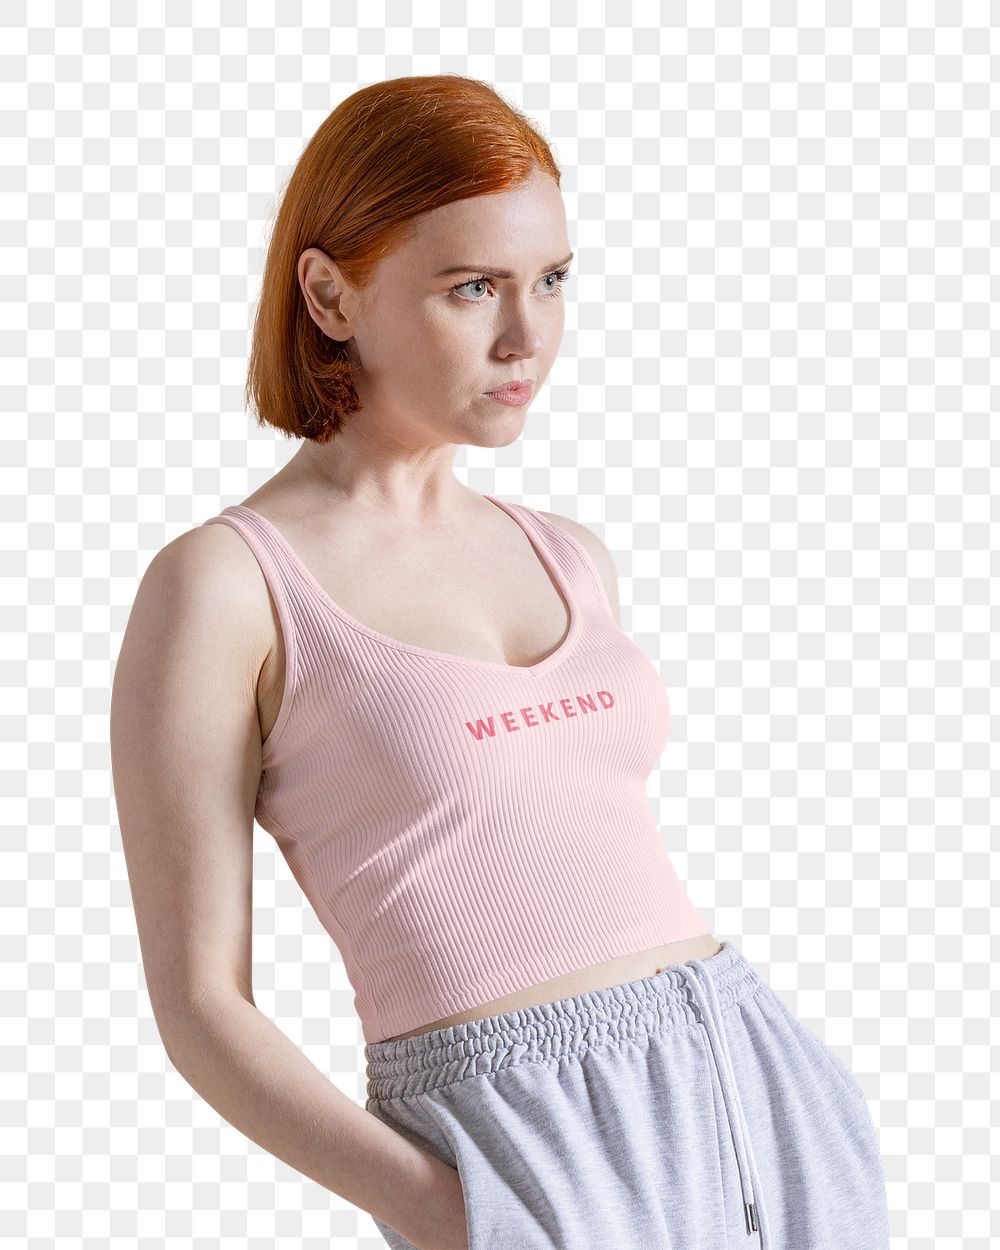 Woman png, wearing pink tank top and gray pants